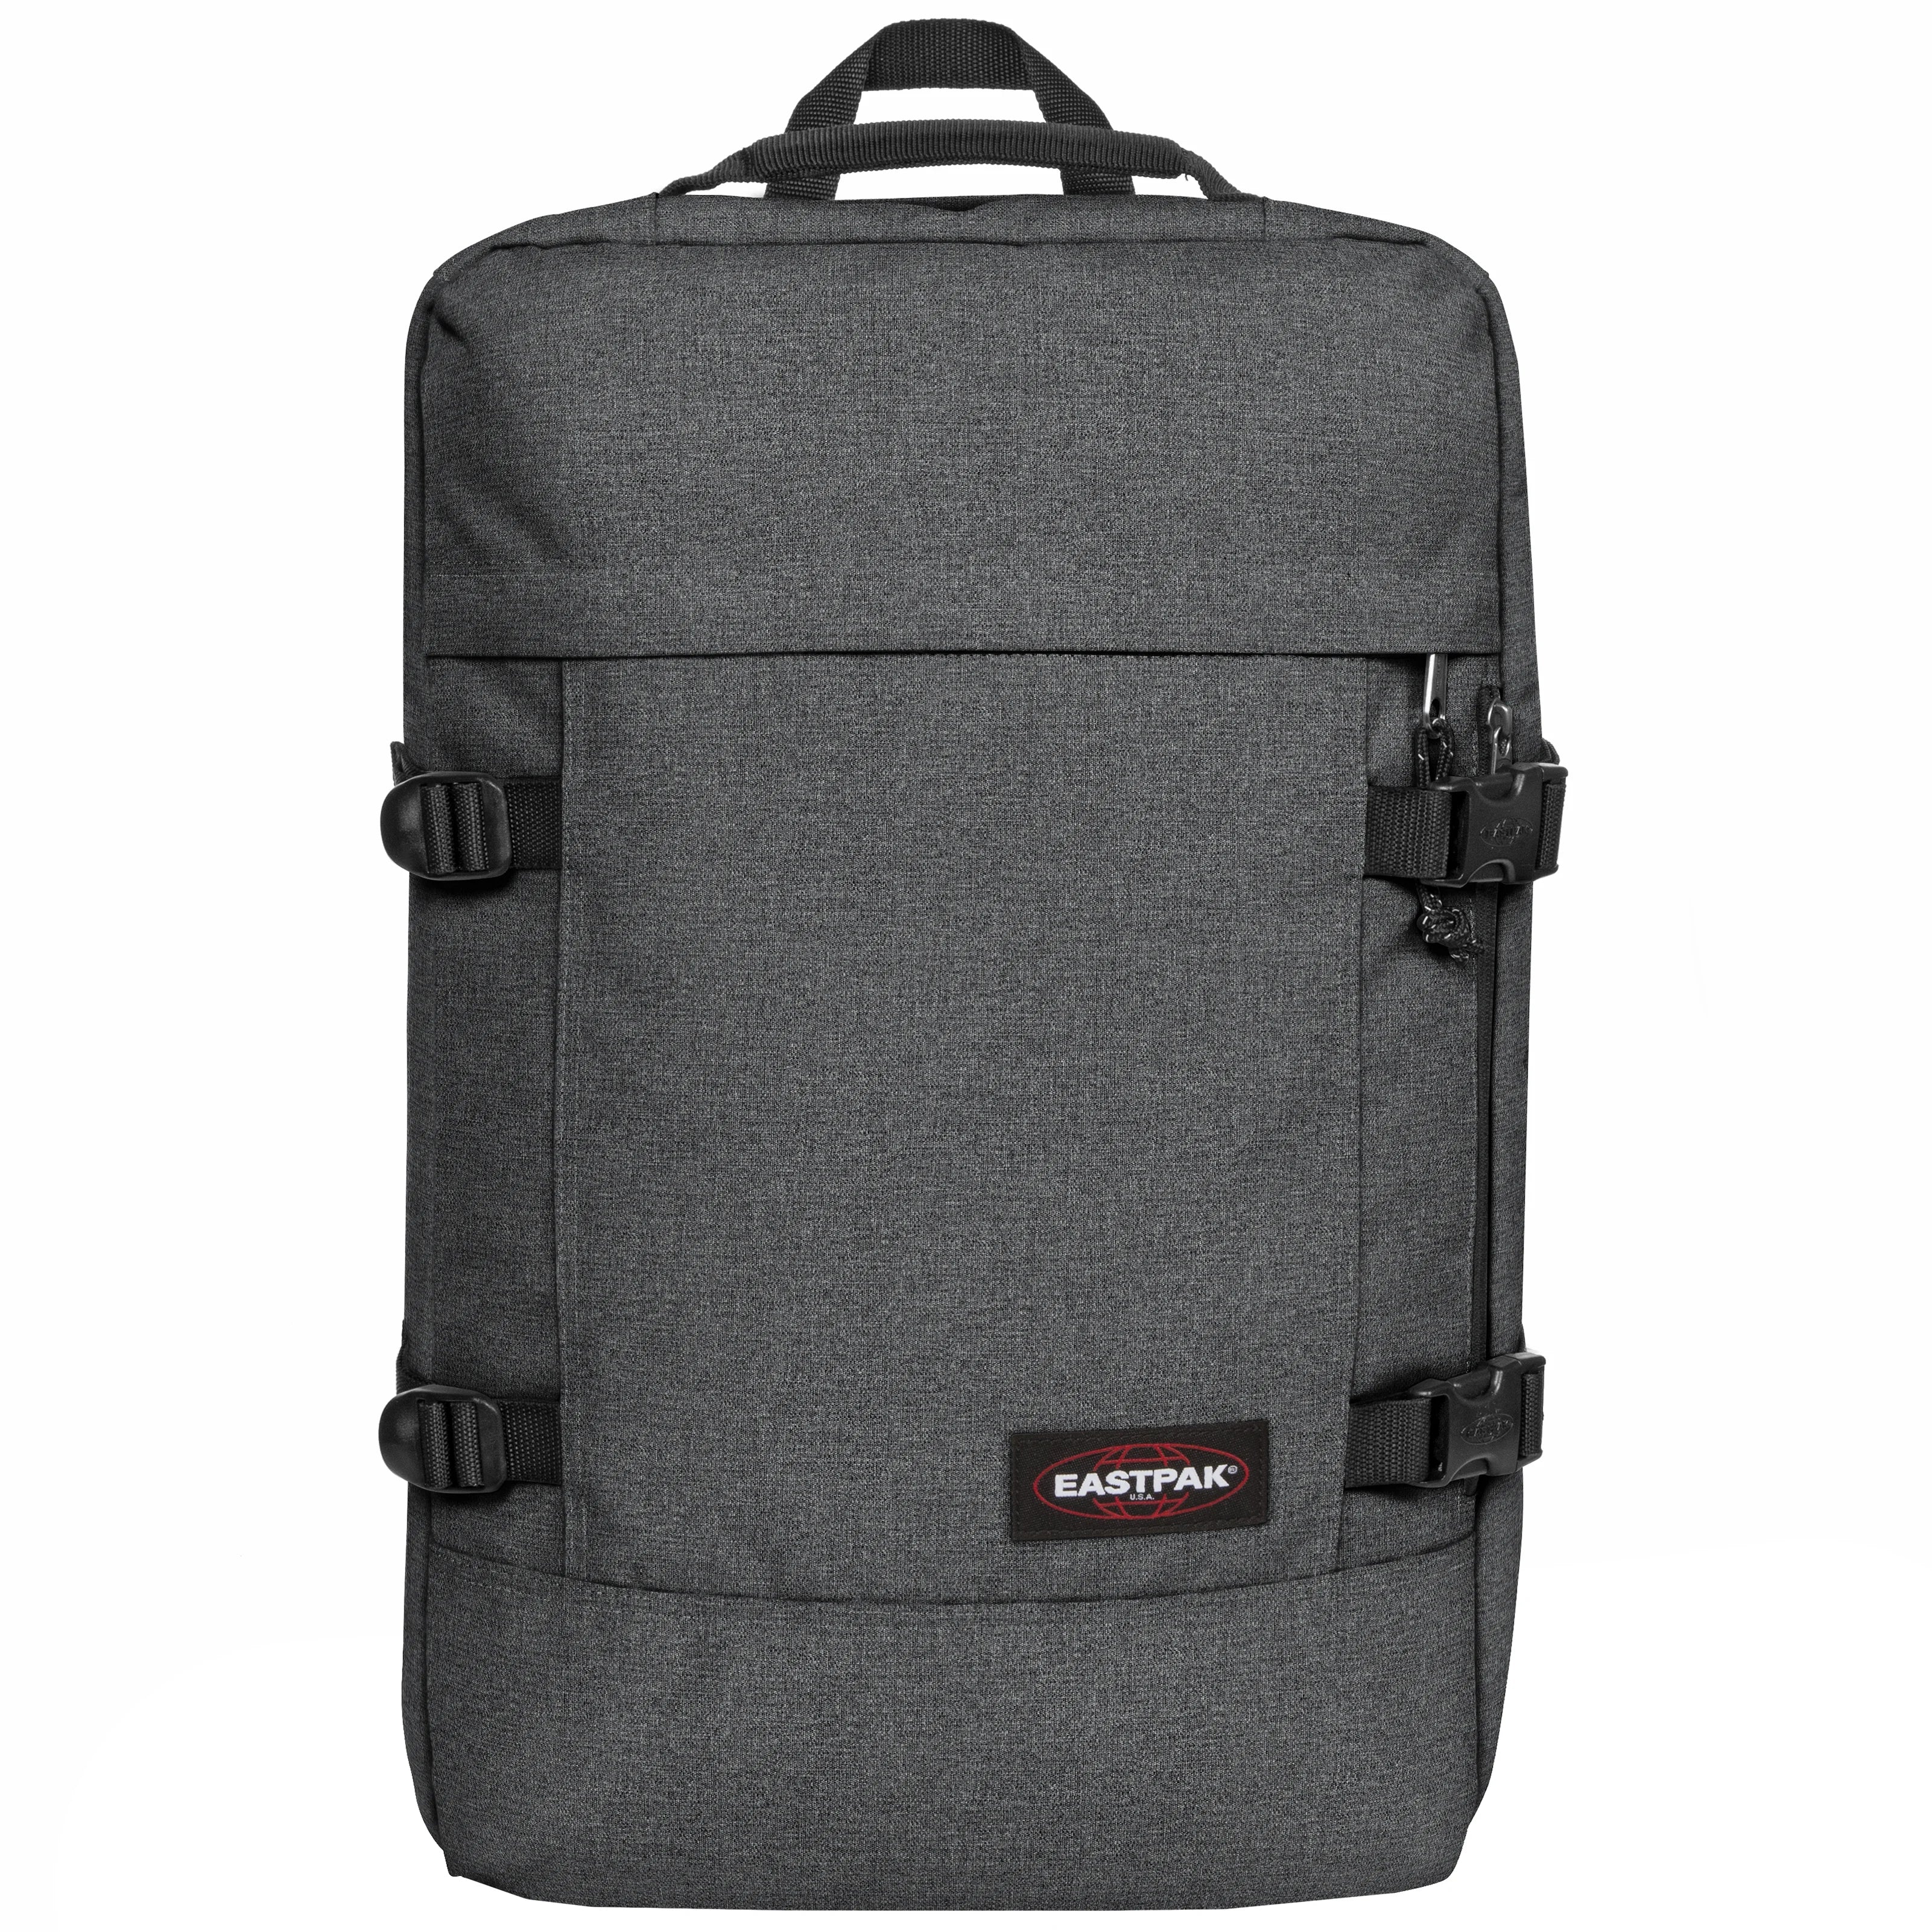 Eastpak Authentic Tranzpack Backpack 51 cm - Black Denim